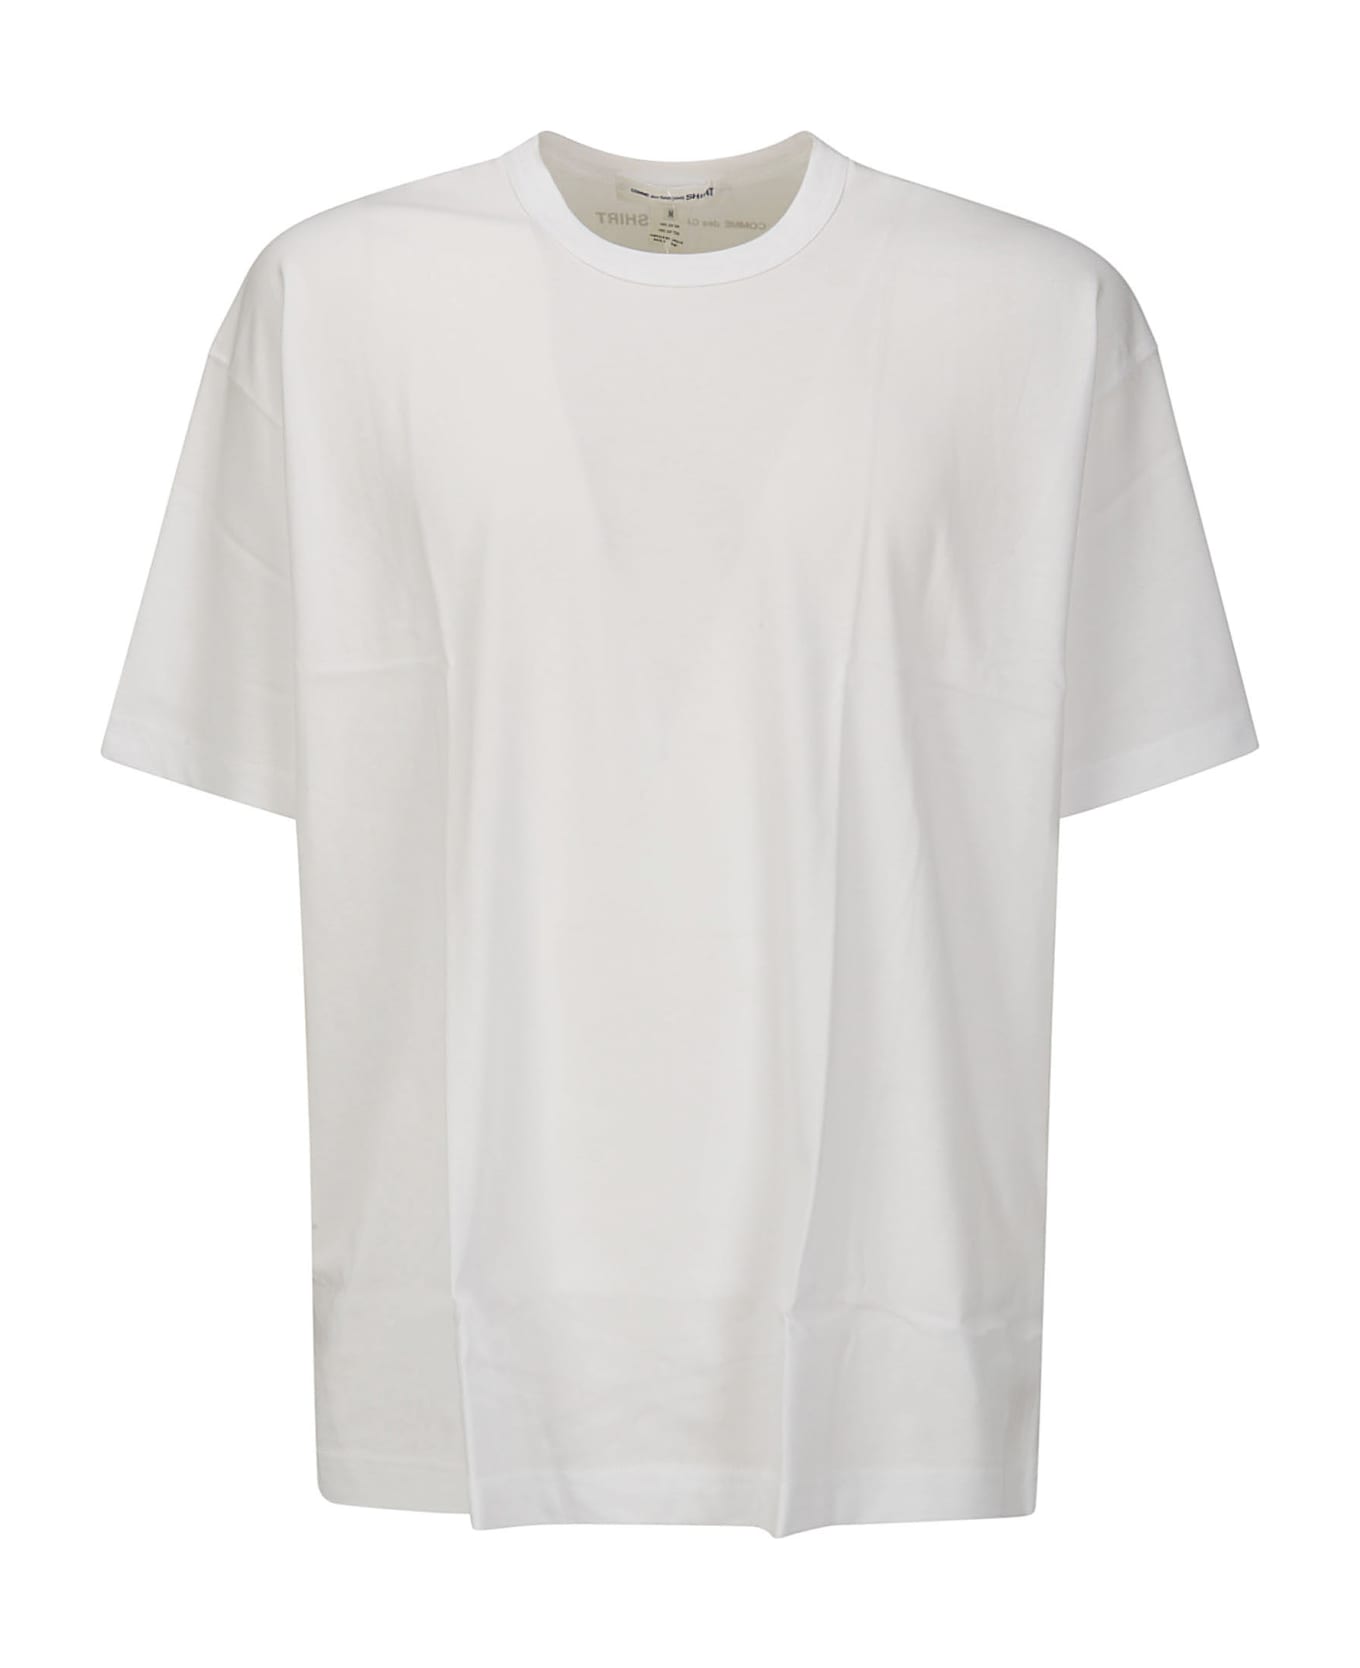 Comme des Garçons Shirt Cotton Jersey Plain With Printed Cdg Shirt L - WHITE